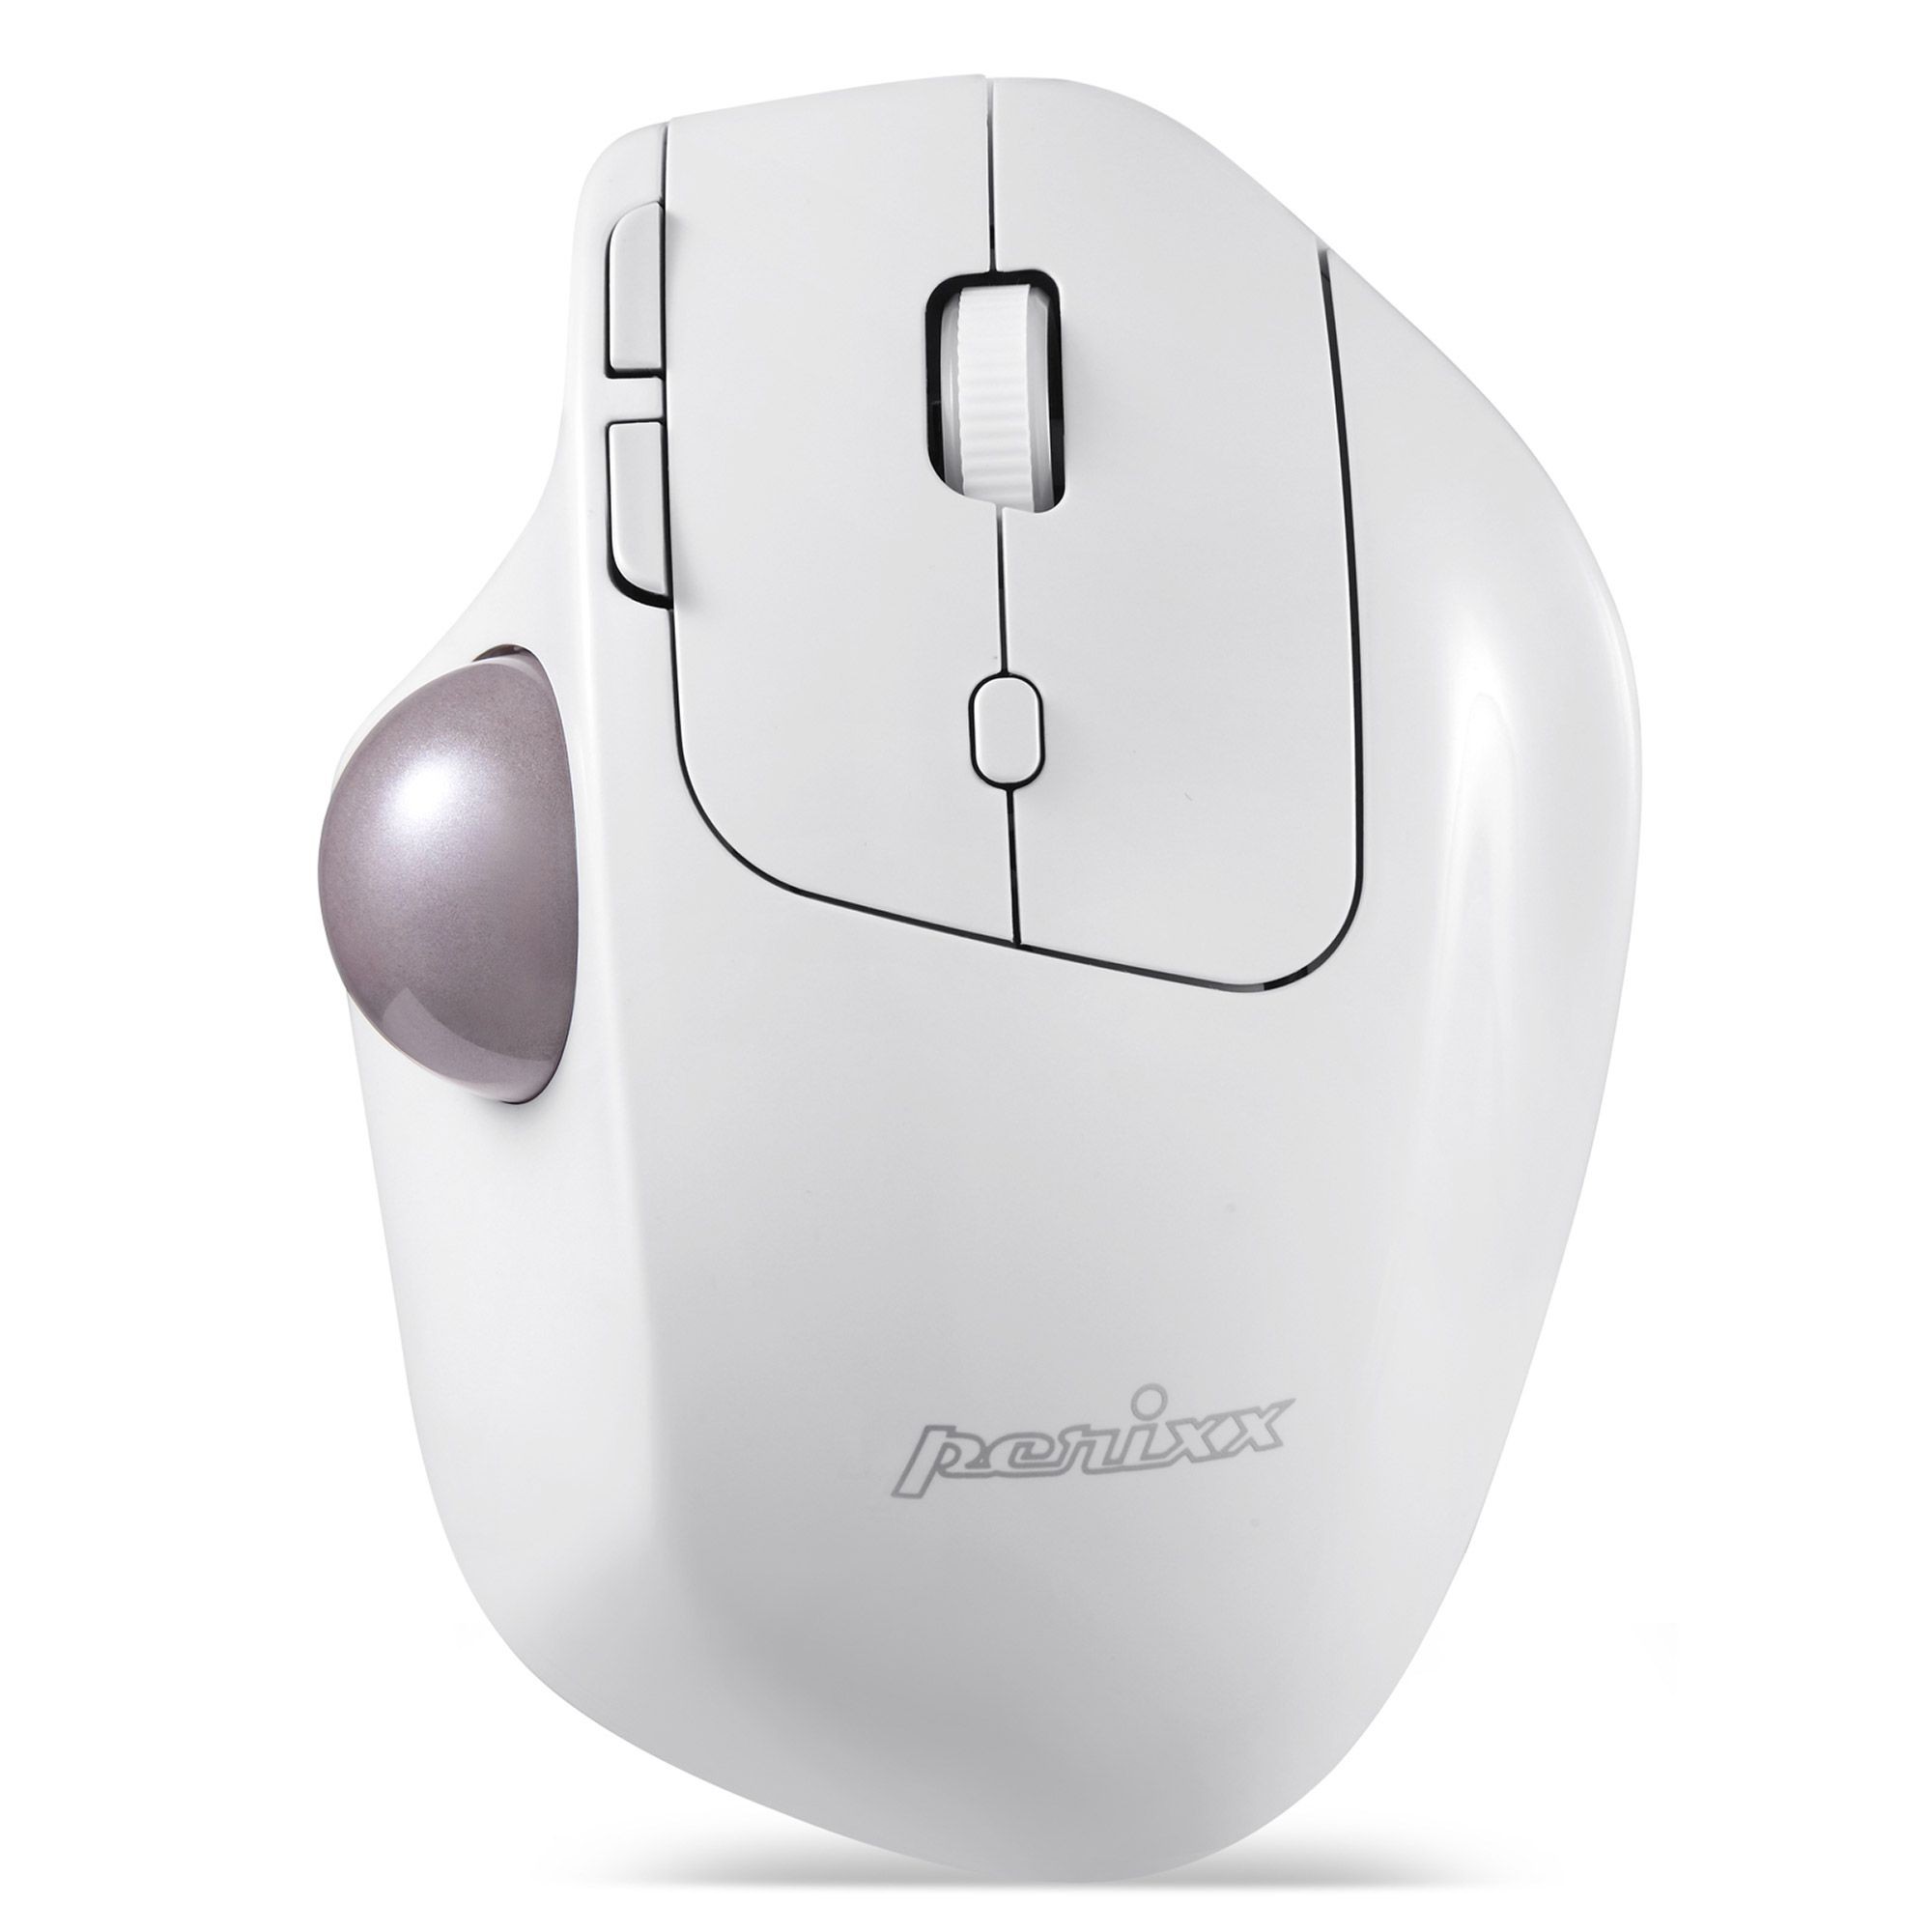 PERIMICE-720W  Ratón trackball ergonómico inalámbrico de 2,4 GHz y Bluetooth Blanco Perixx